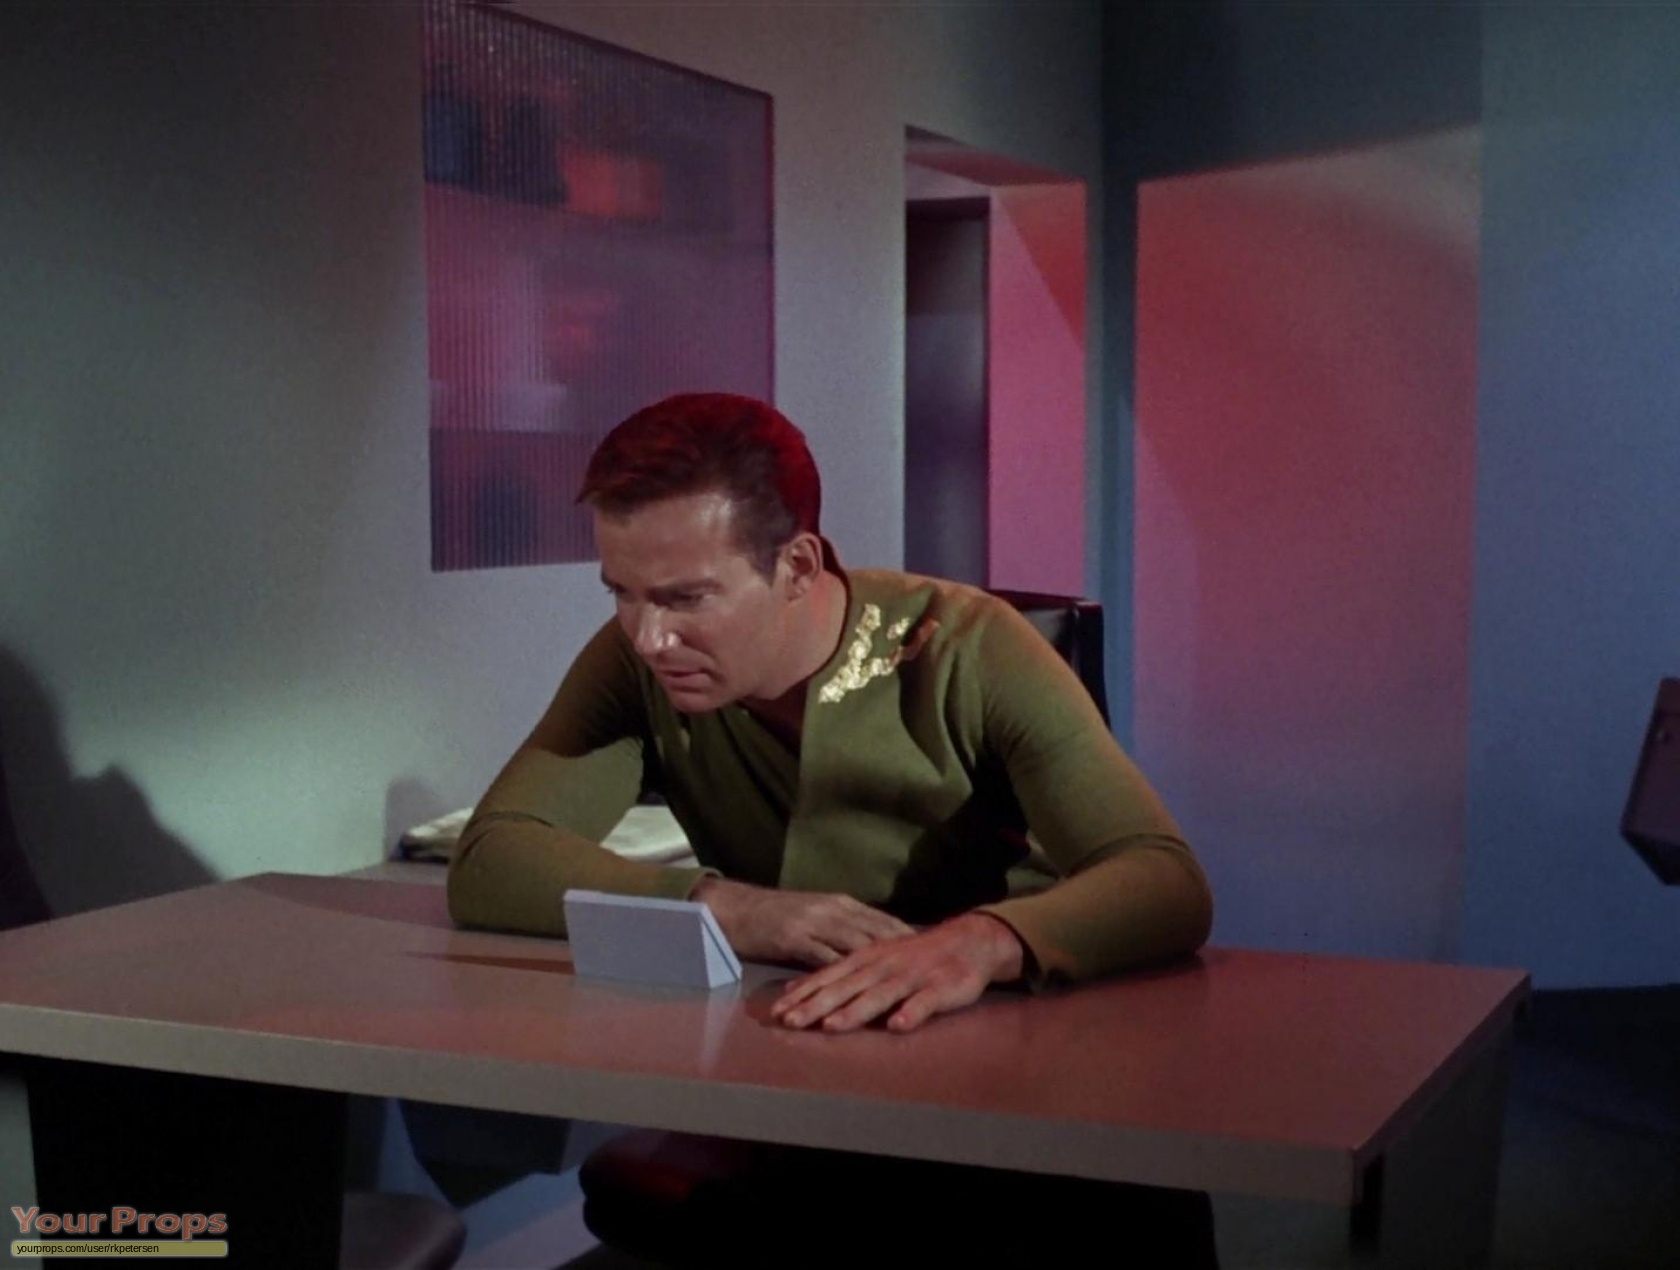 Star Trek: The Original Series Desktop Intercom replica TV series prop